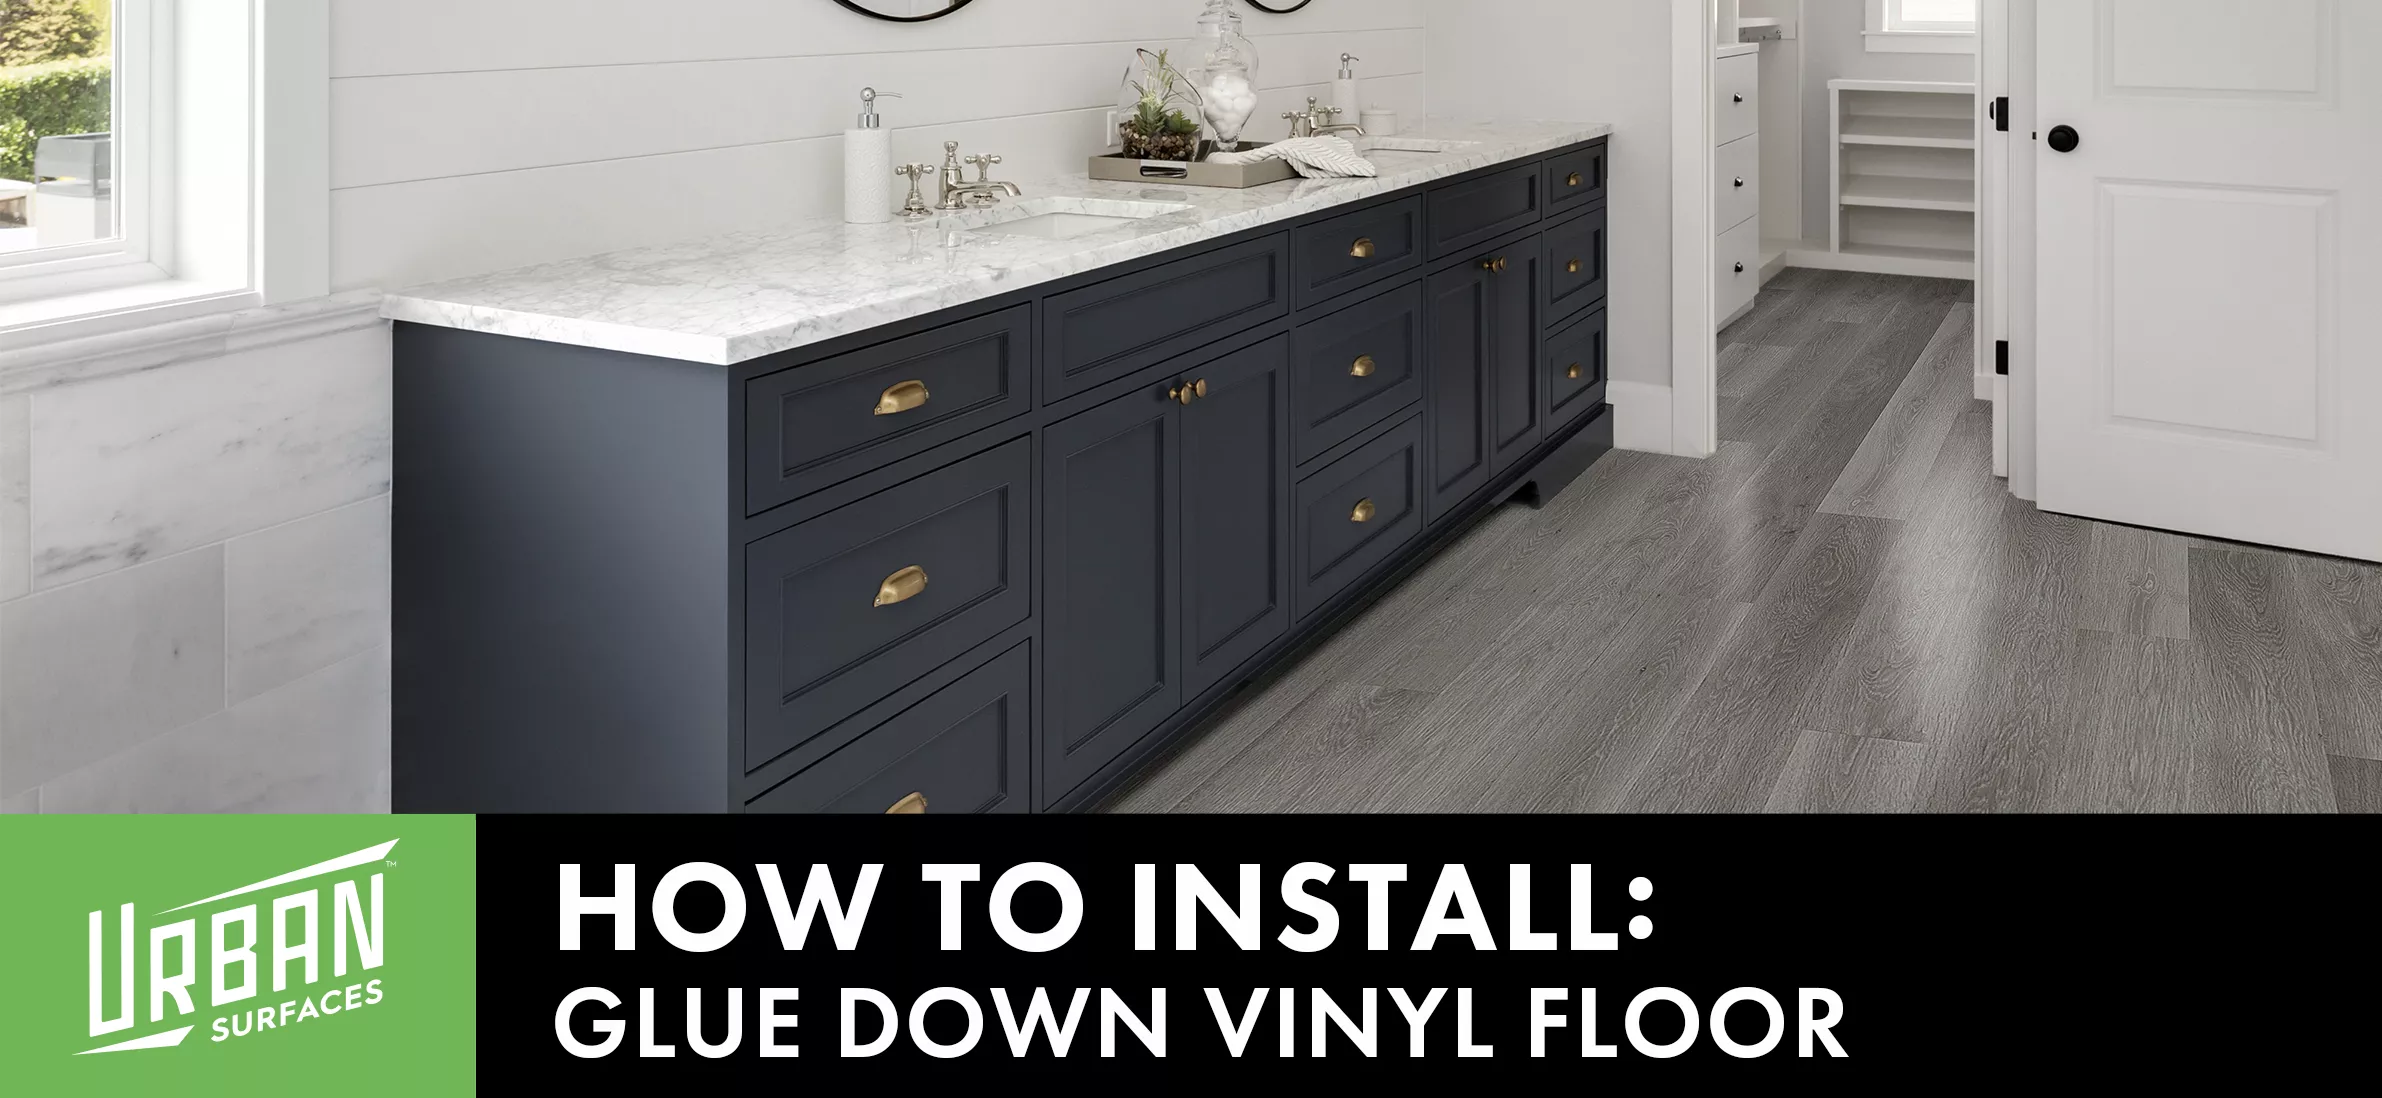 How To Install: GlueDown Vinyl Floor